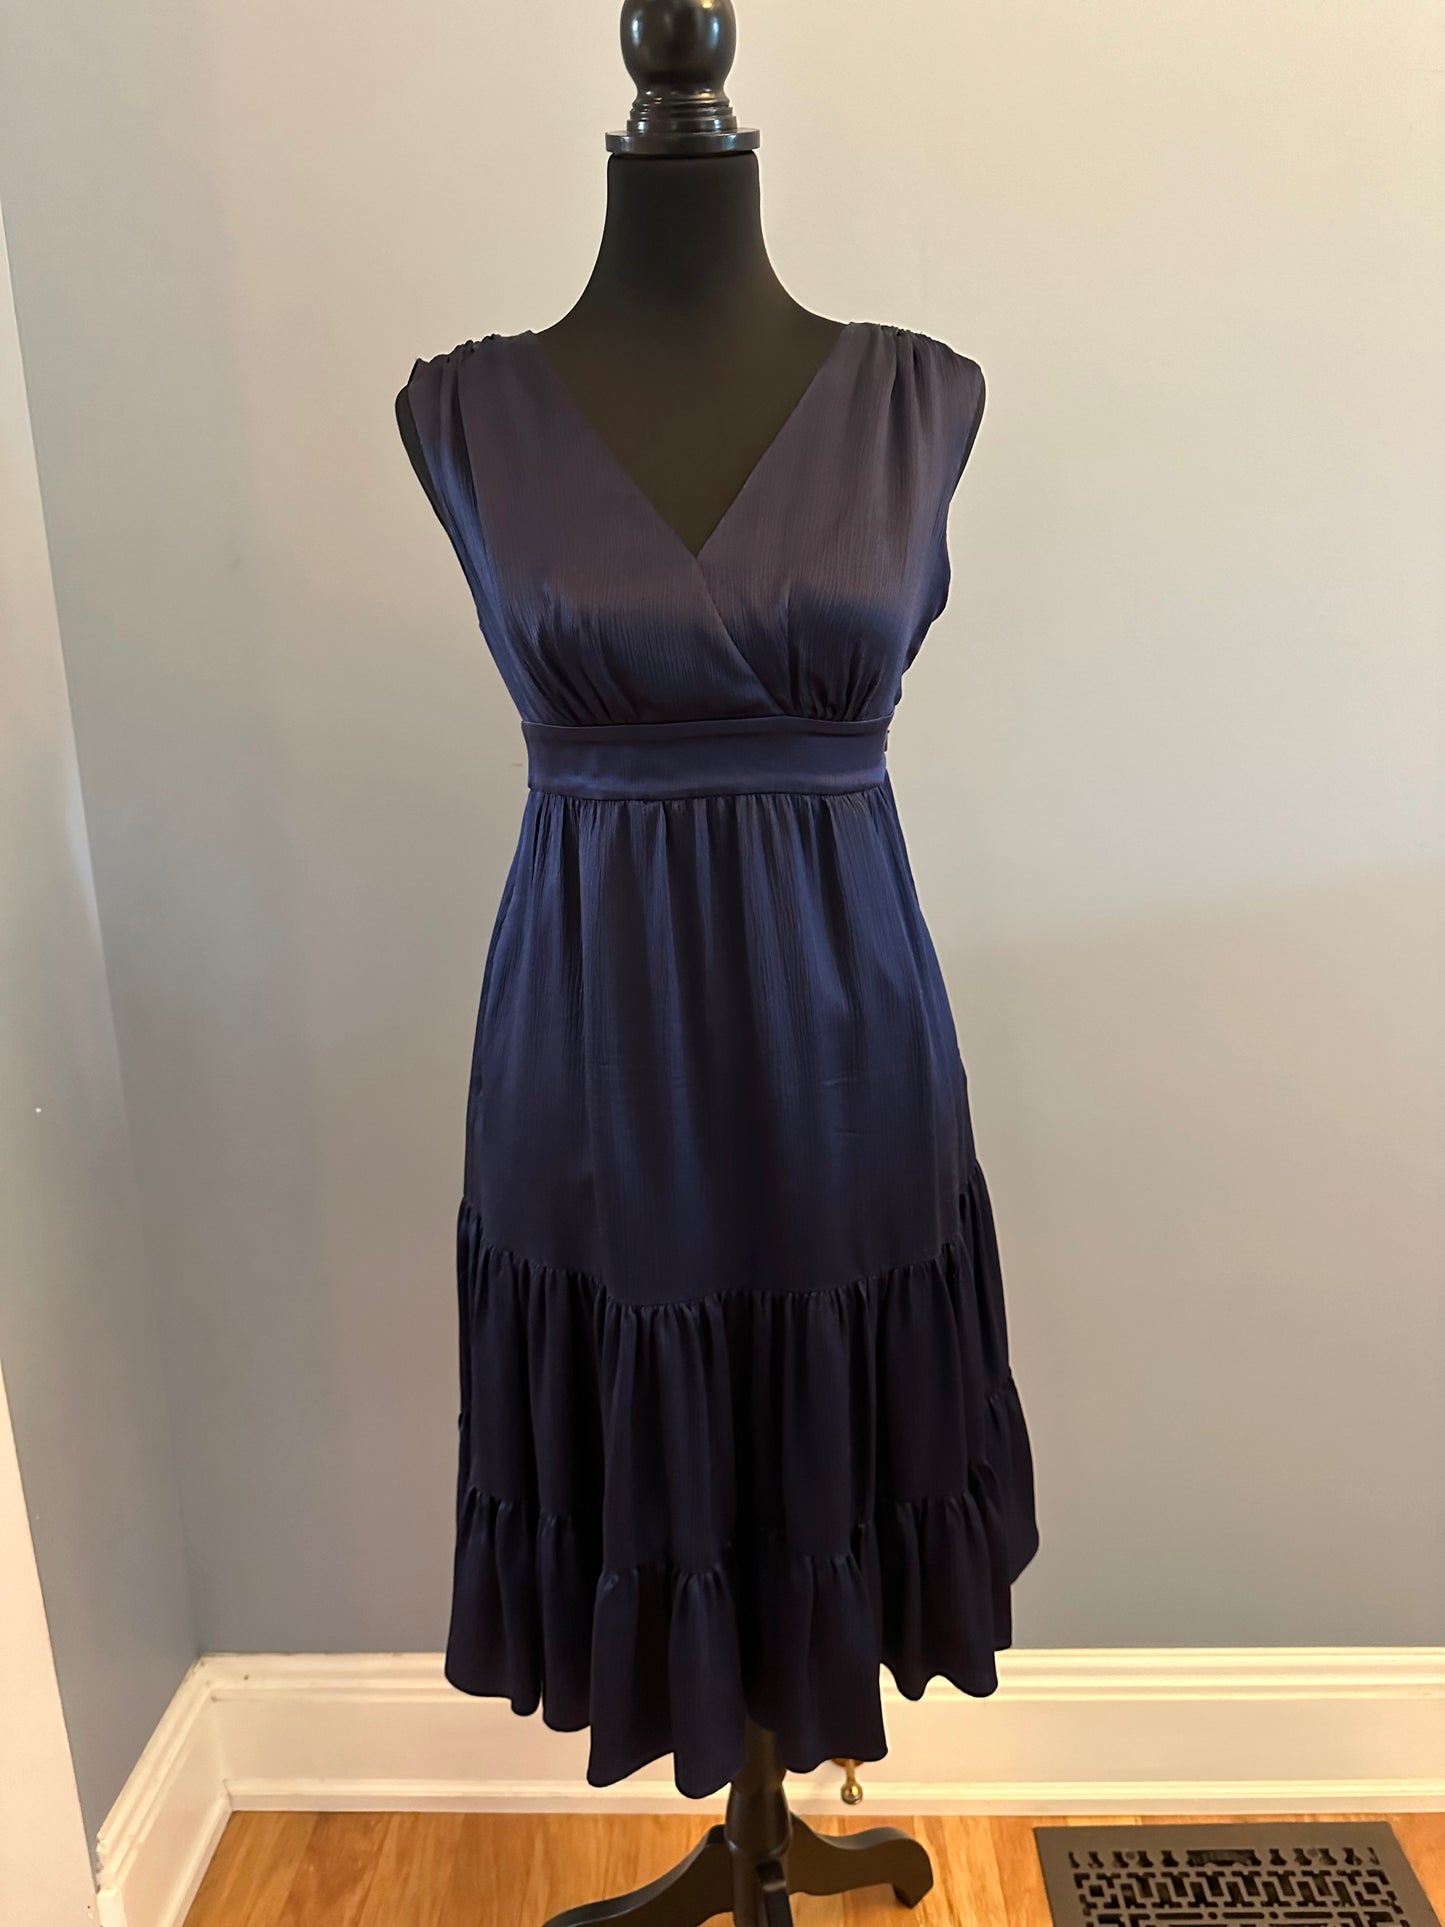 Lily Pulitzer Blue Silk Dress size 0